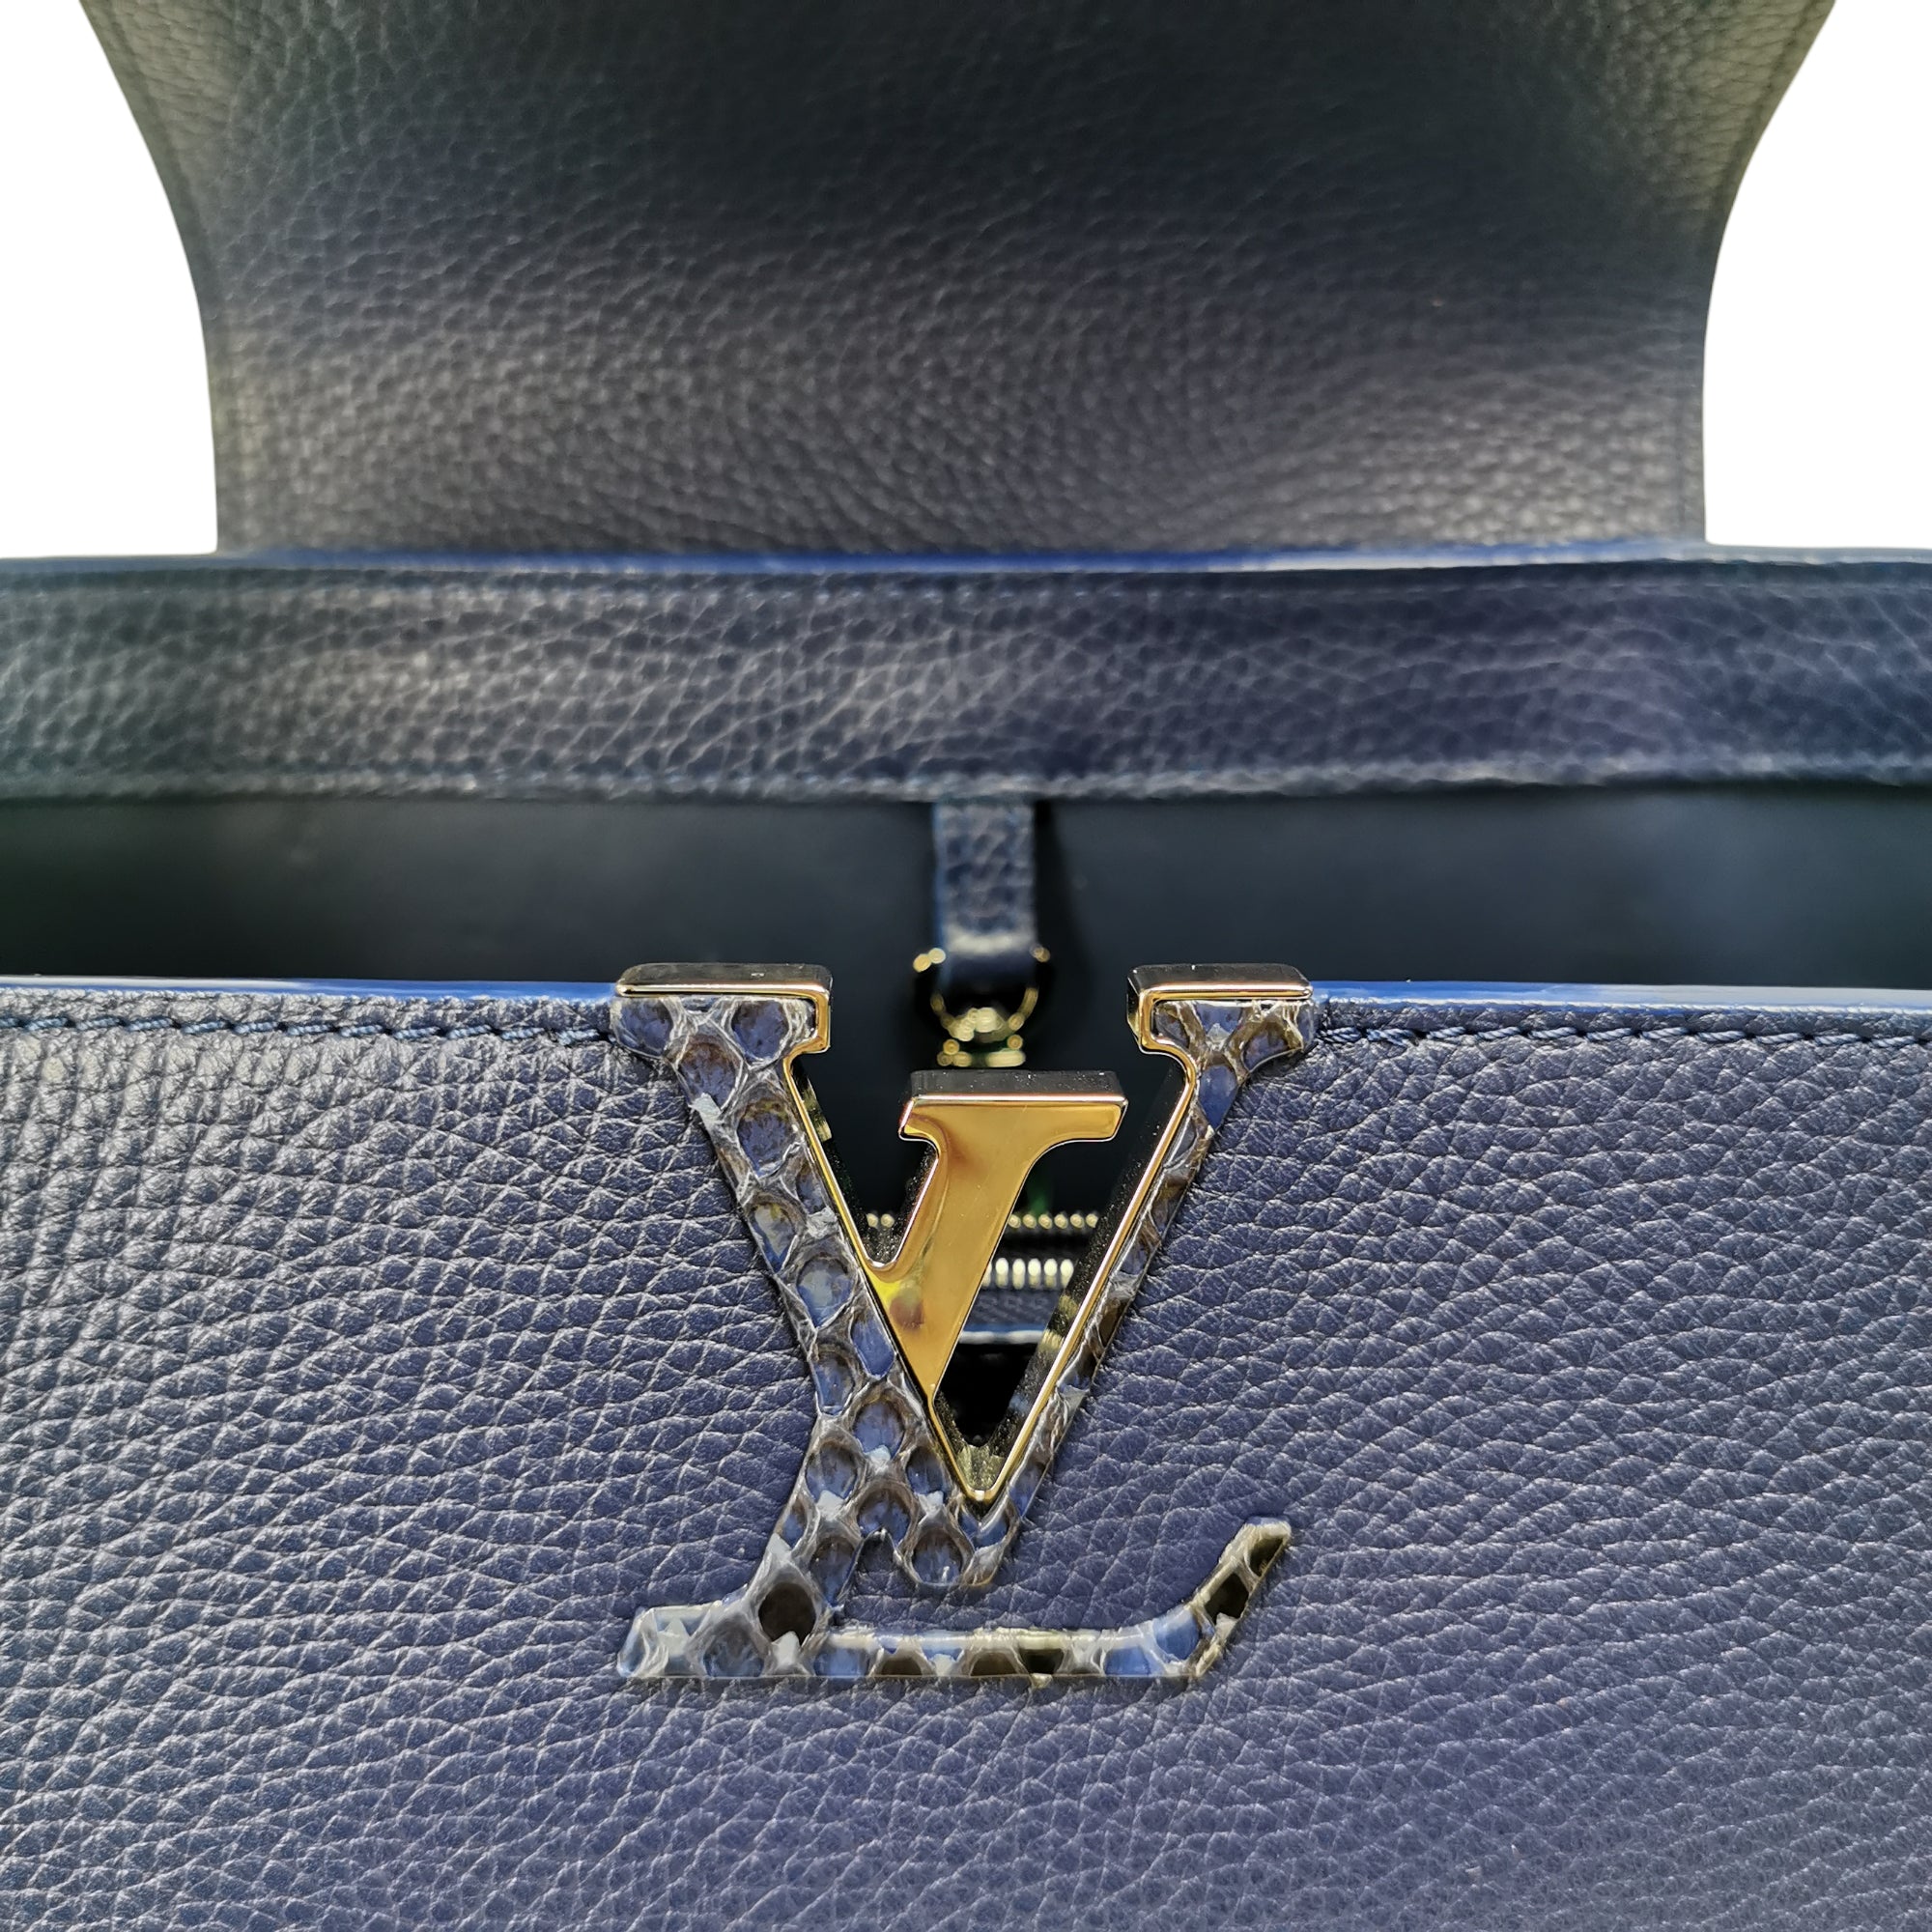 Louis Vuitton Capucines mm Handbag in Navy Blue Leather Taurillon